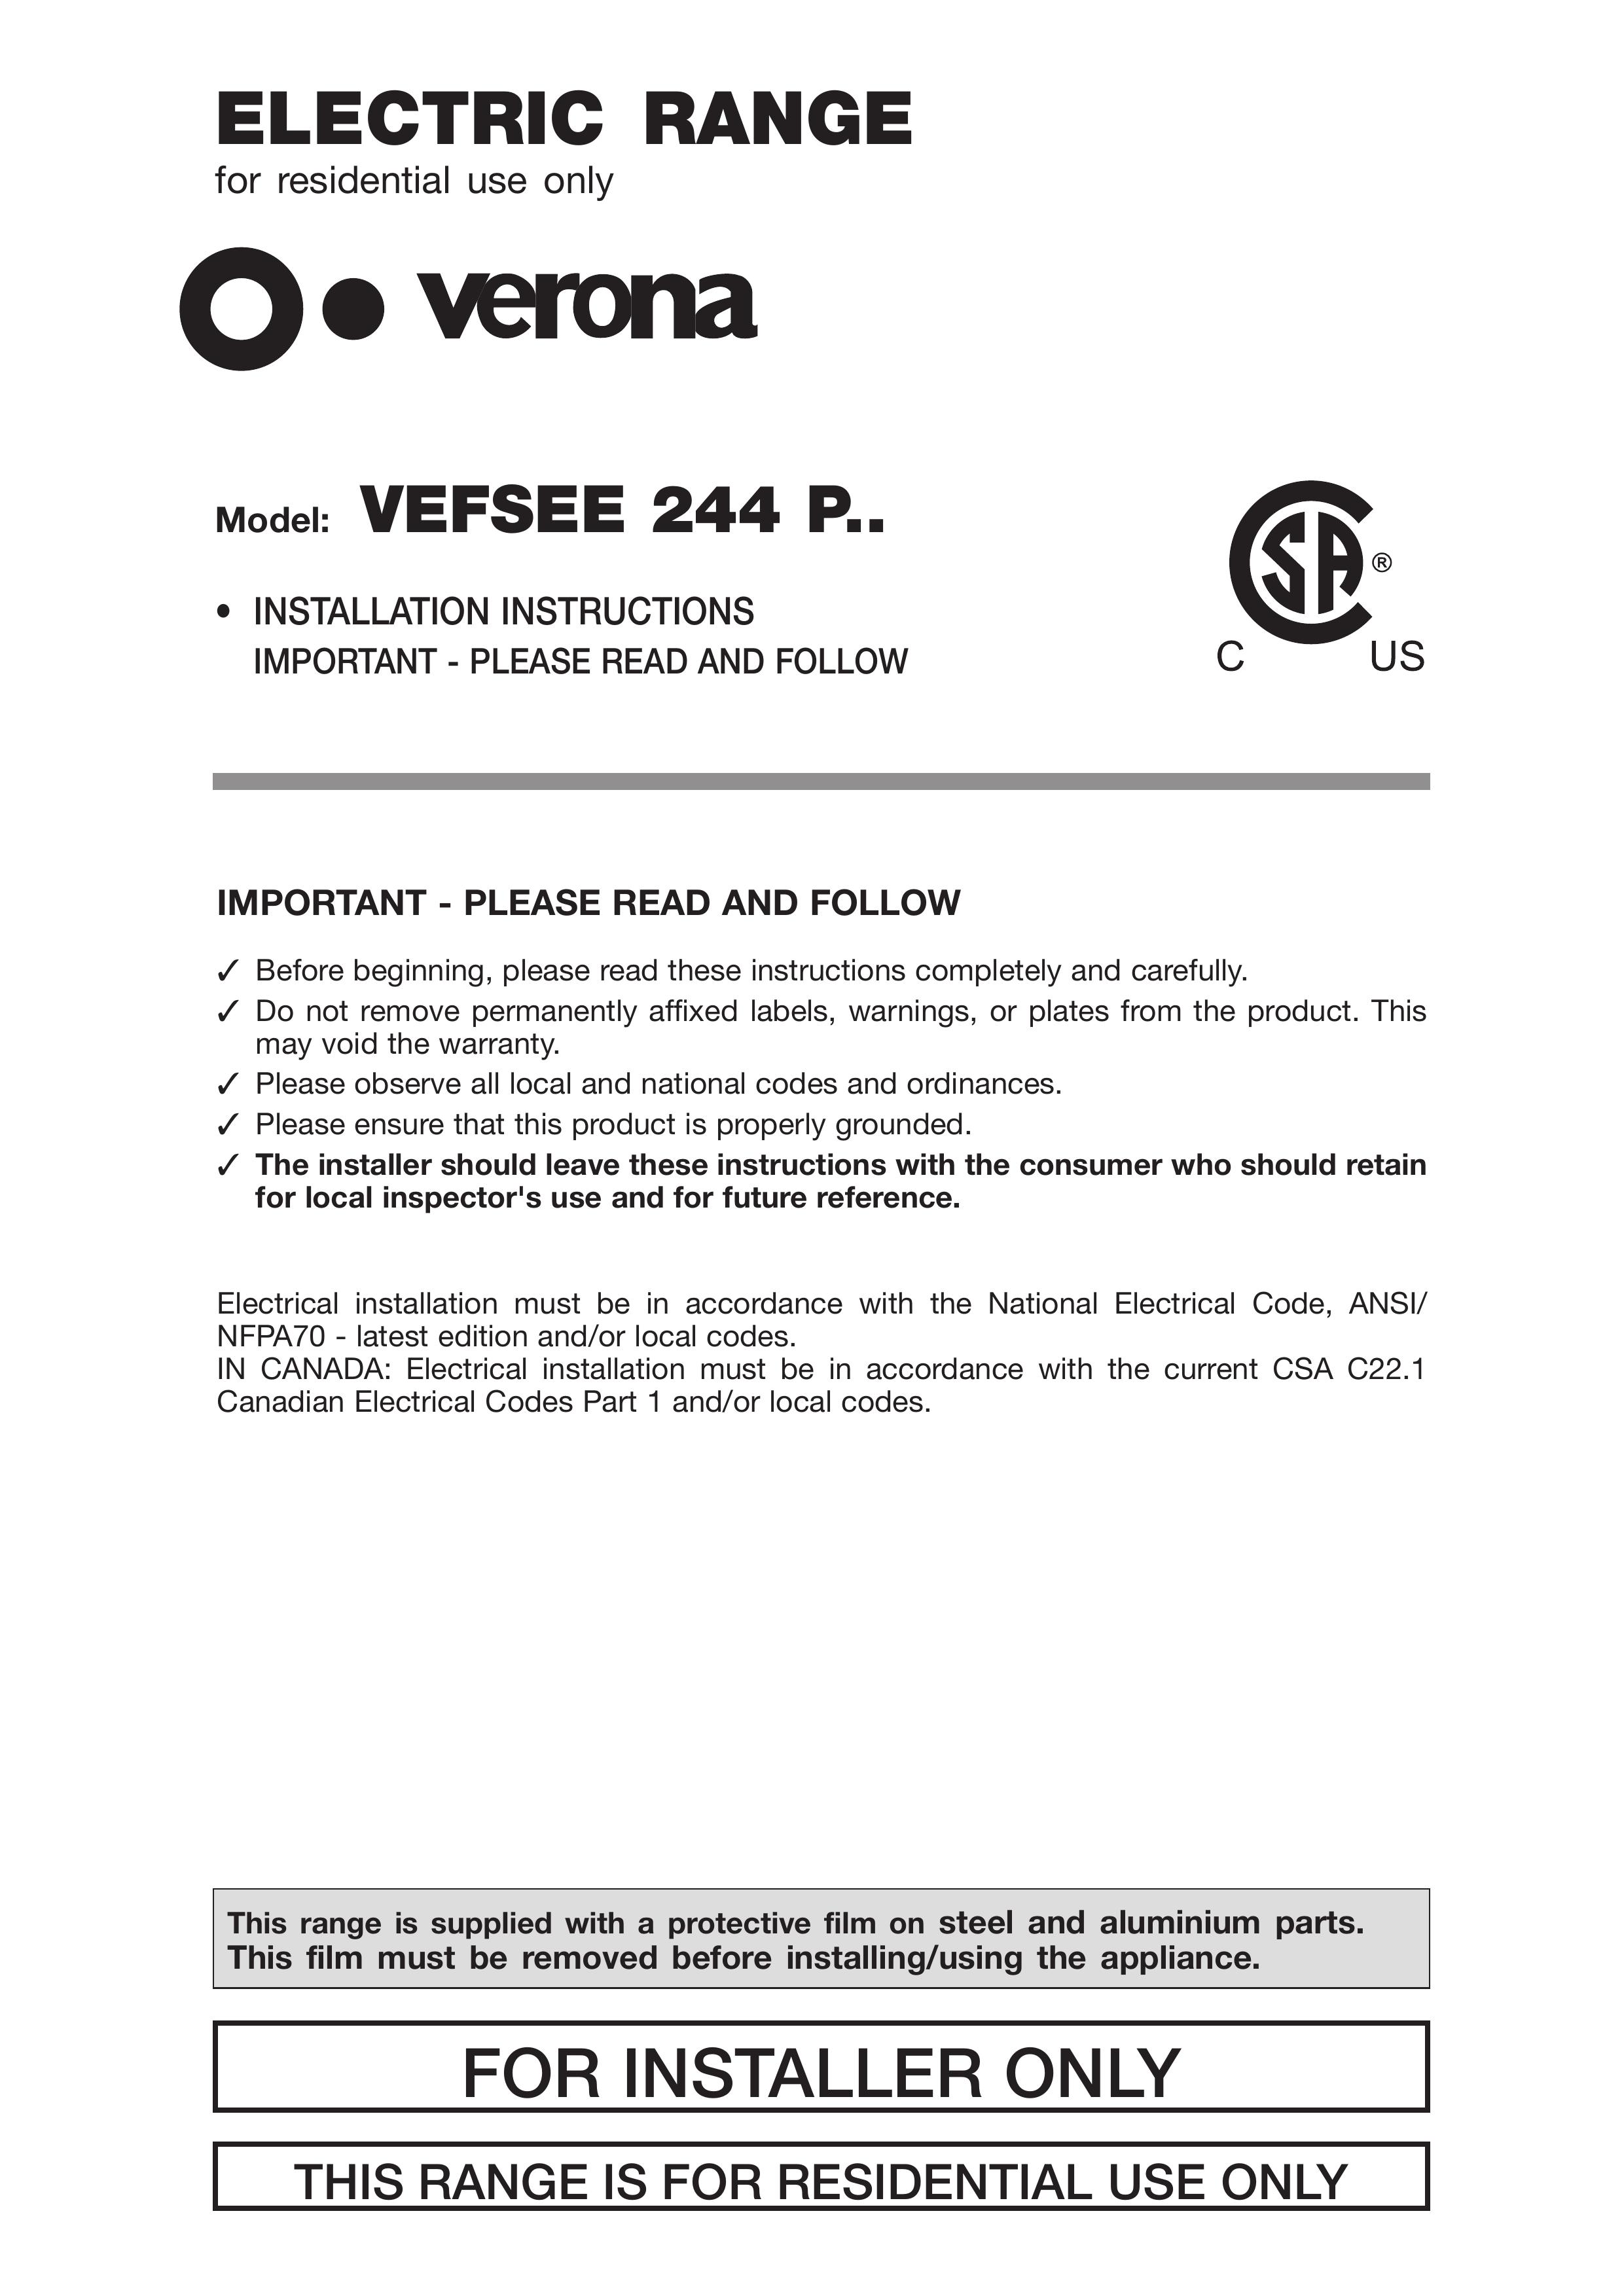 Verona VEFSEE 244 P.. Range User Manual